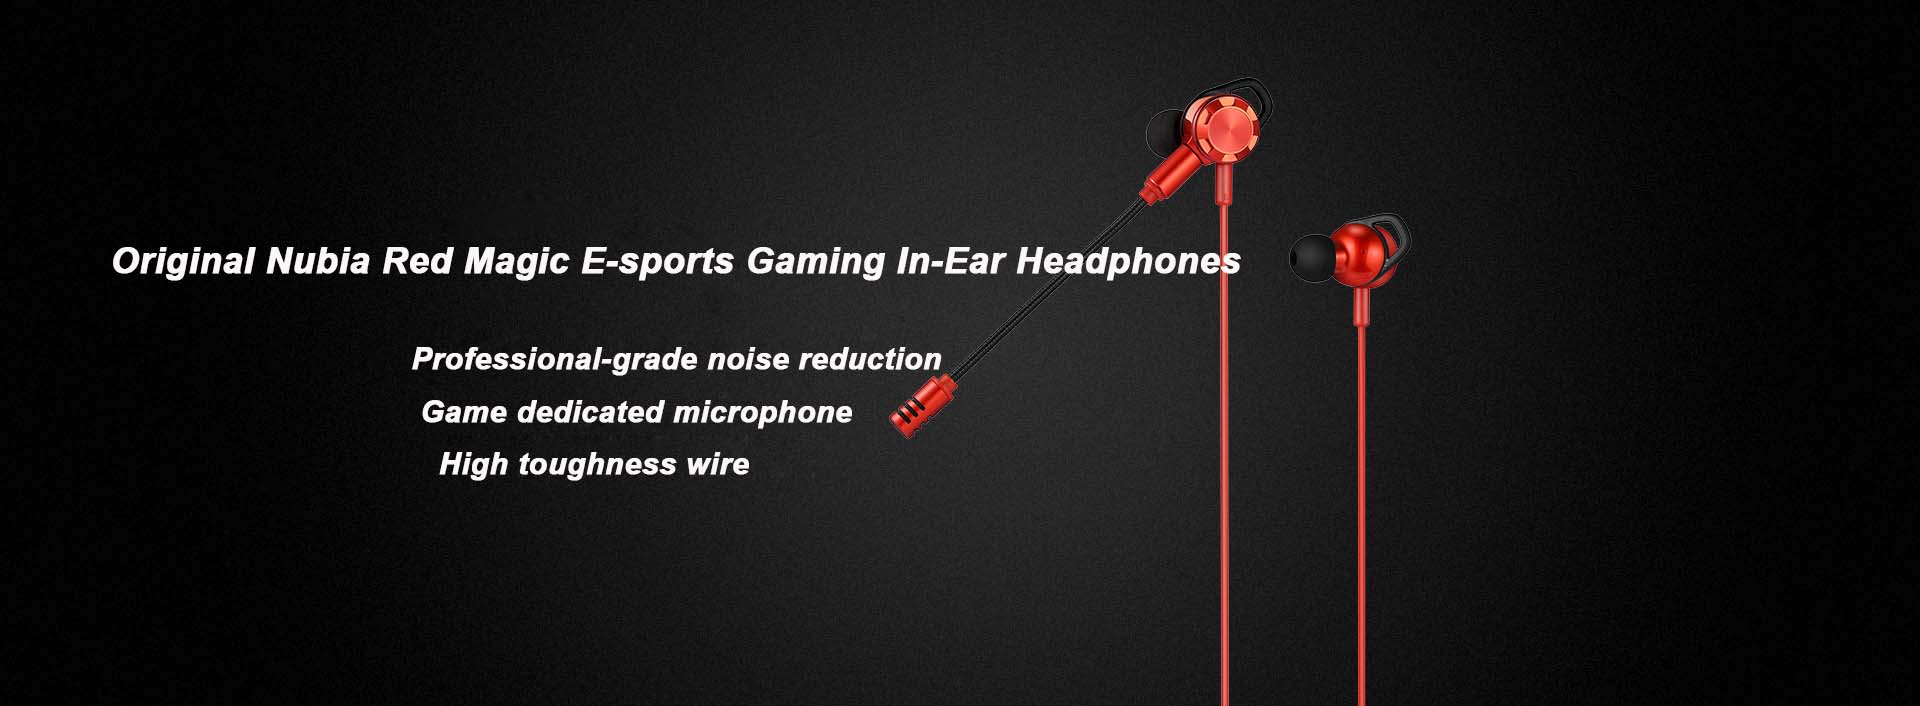 Nubia E-sports Gaming headphones 